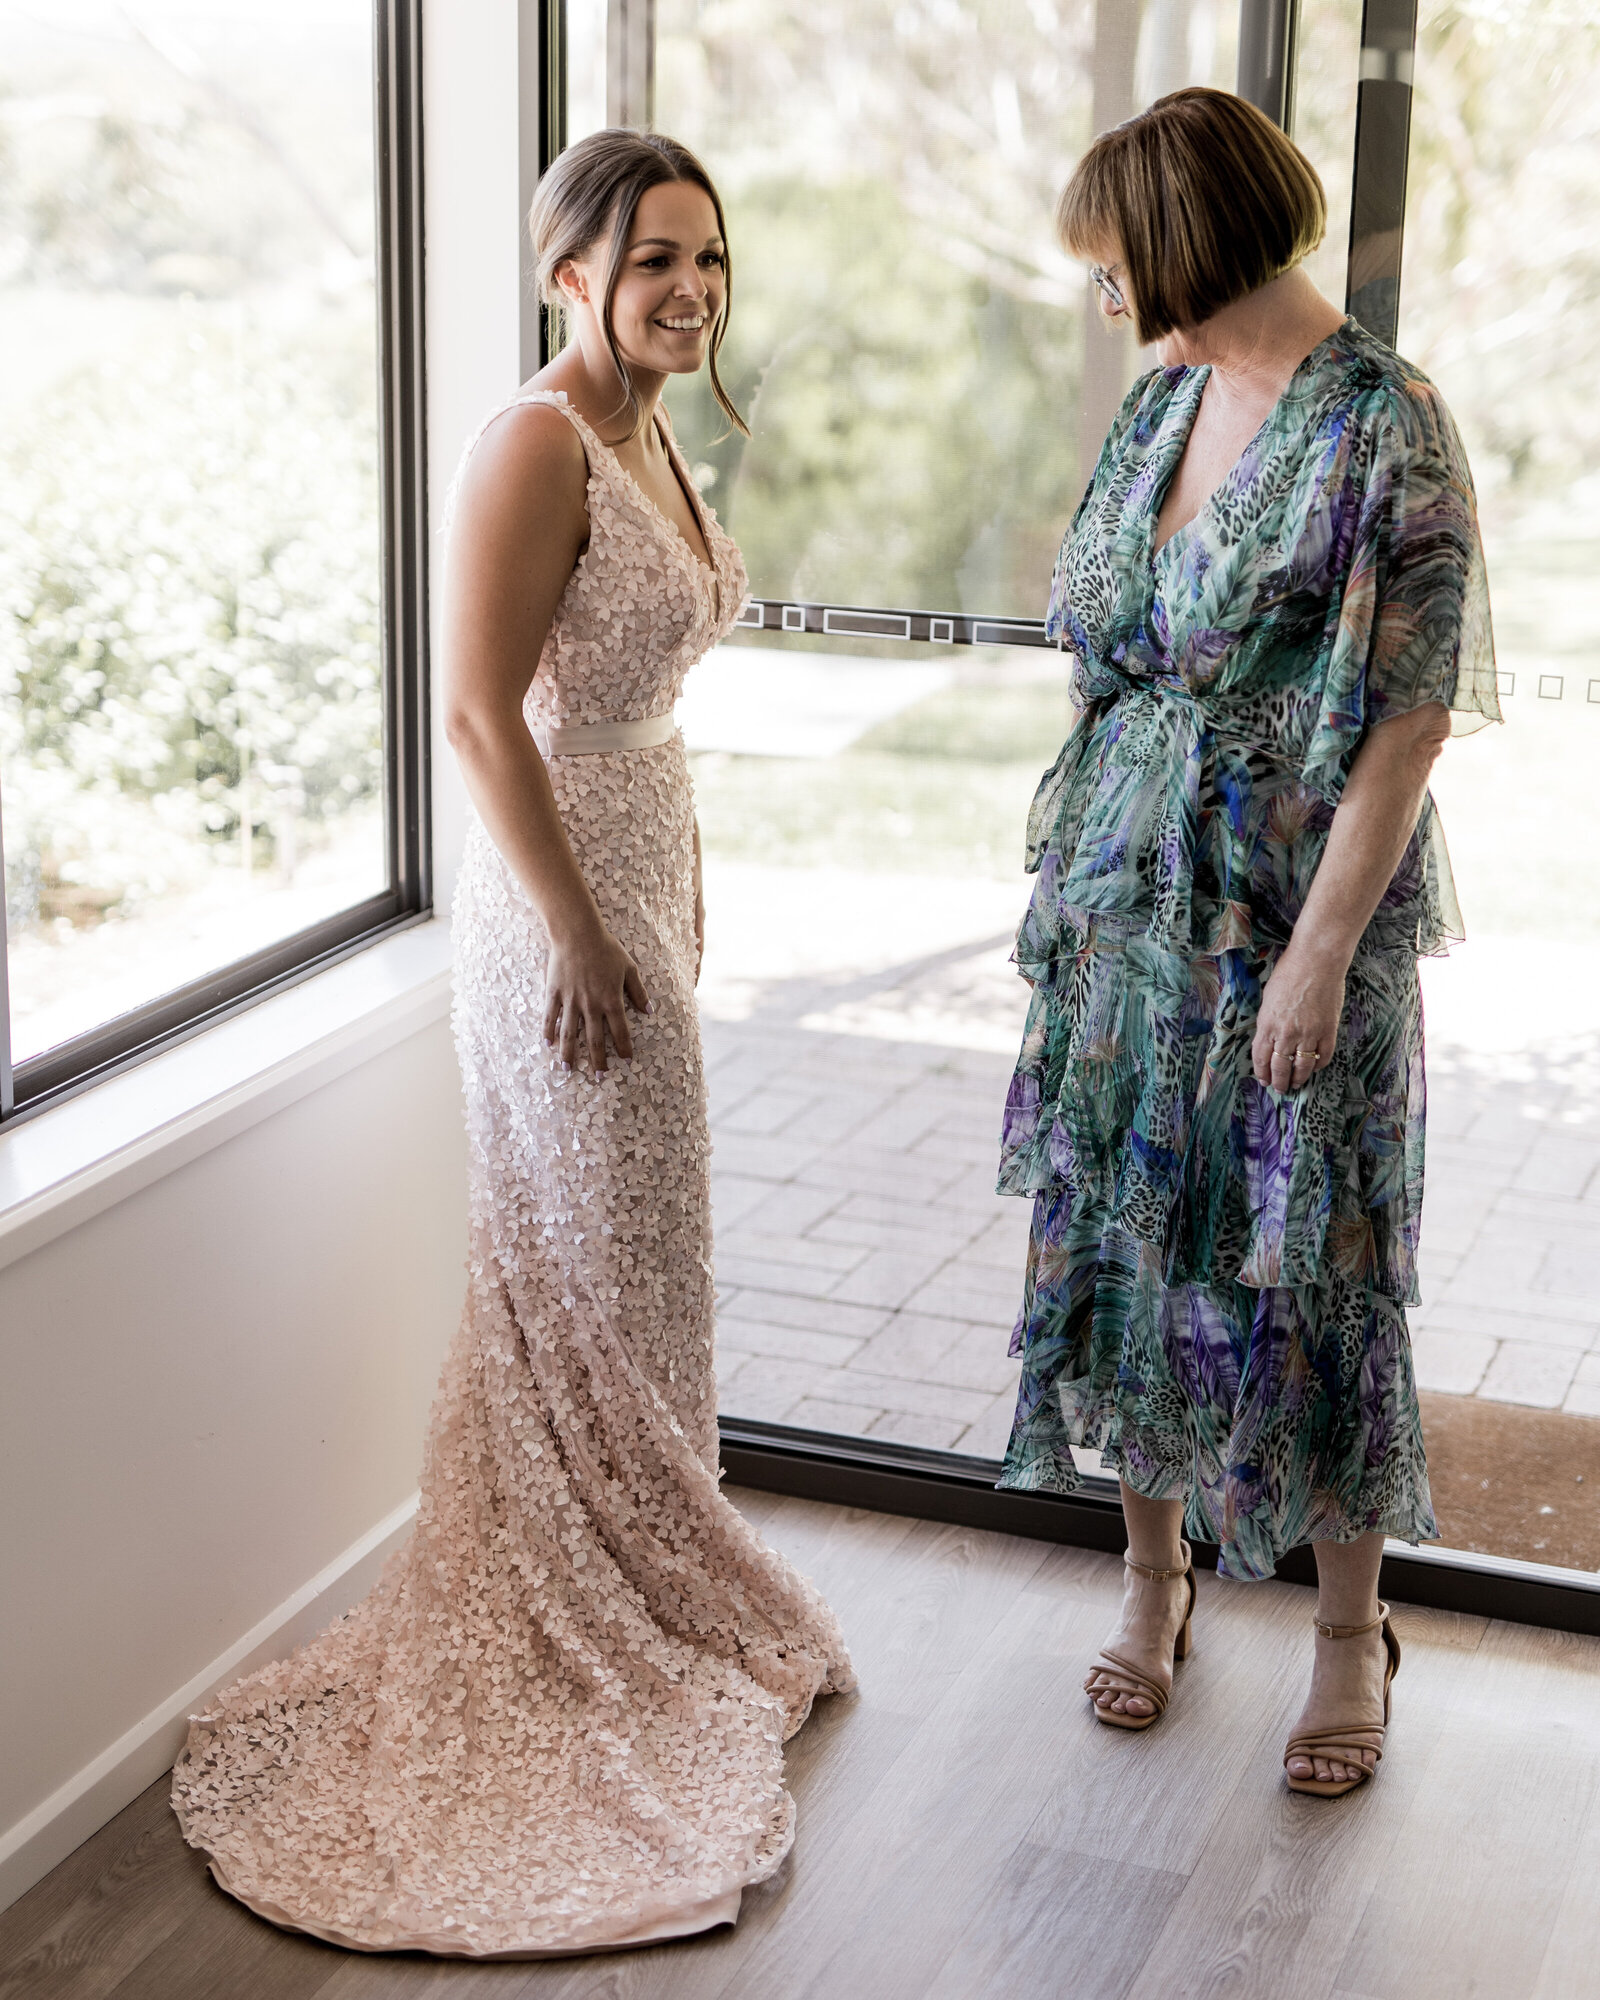 Chloe-Benny-Rexvil-Photography-Adelaide-Wedding-Photographer-115